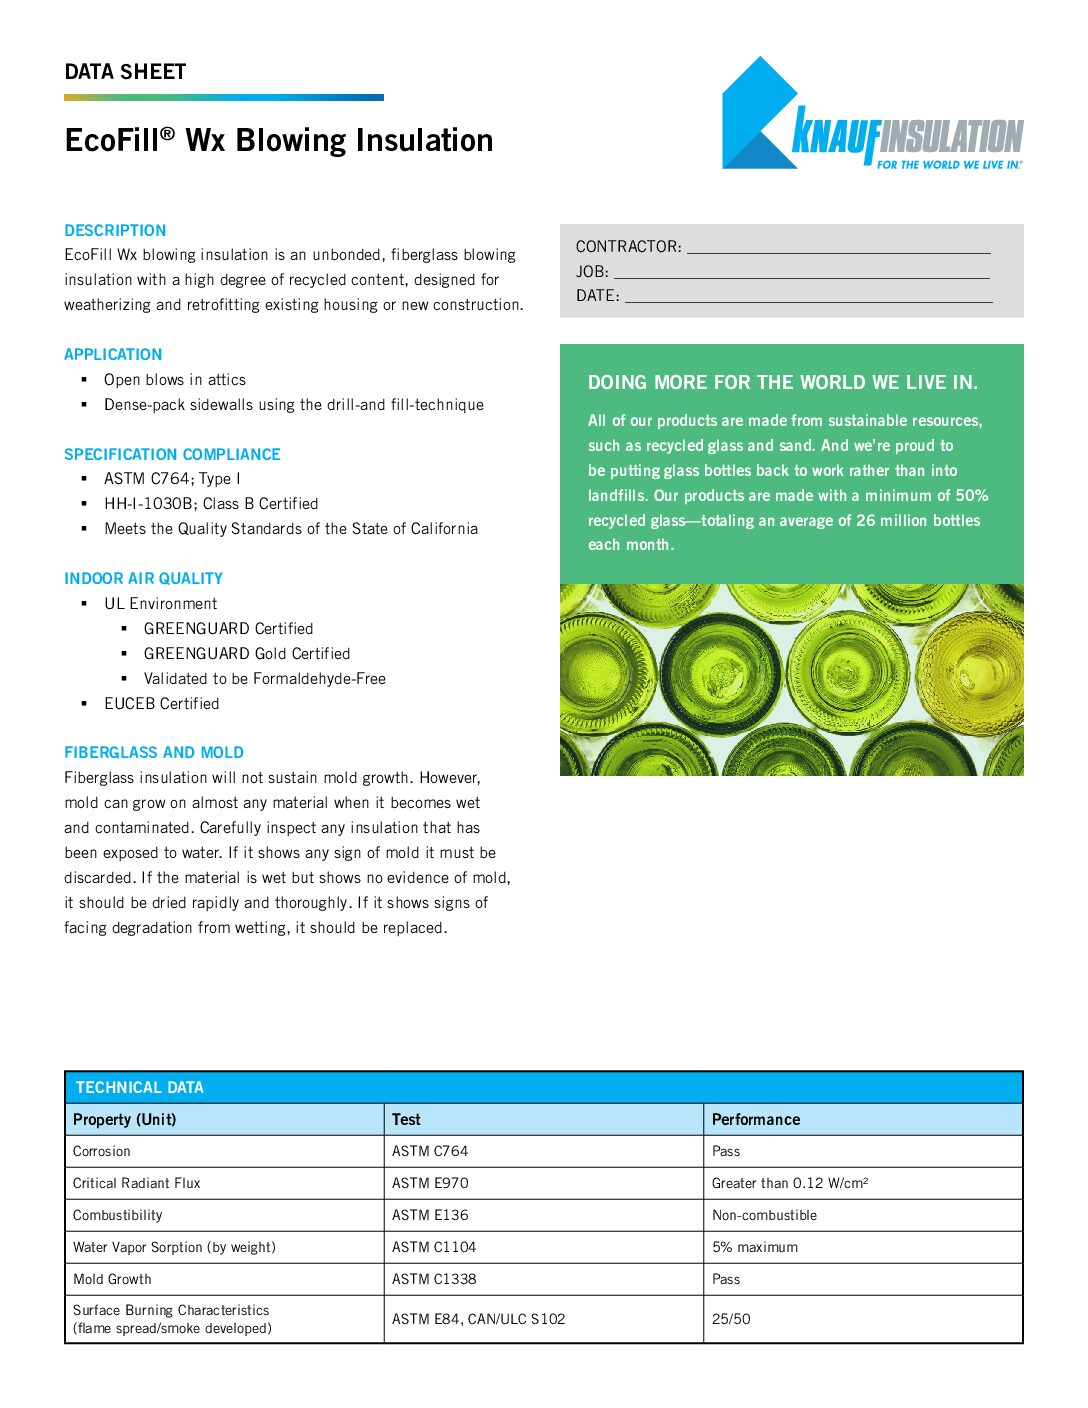 Knauf EcoFill® Wx Blowing Insulation Data Sheet - Document Screen Grab